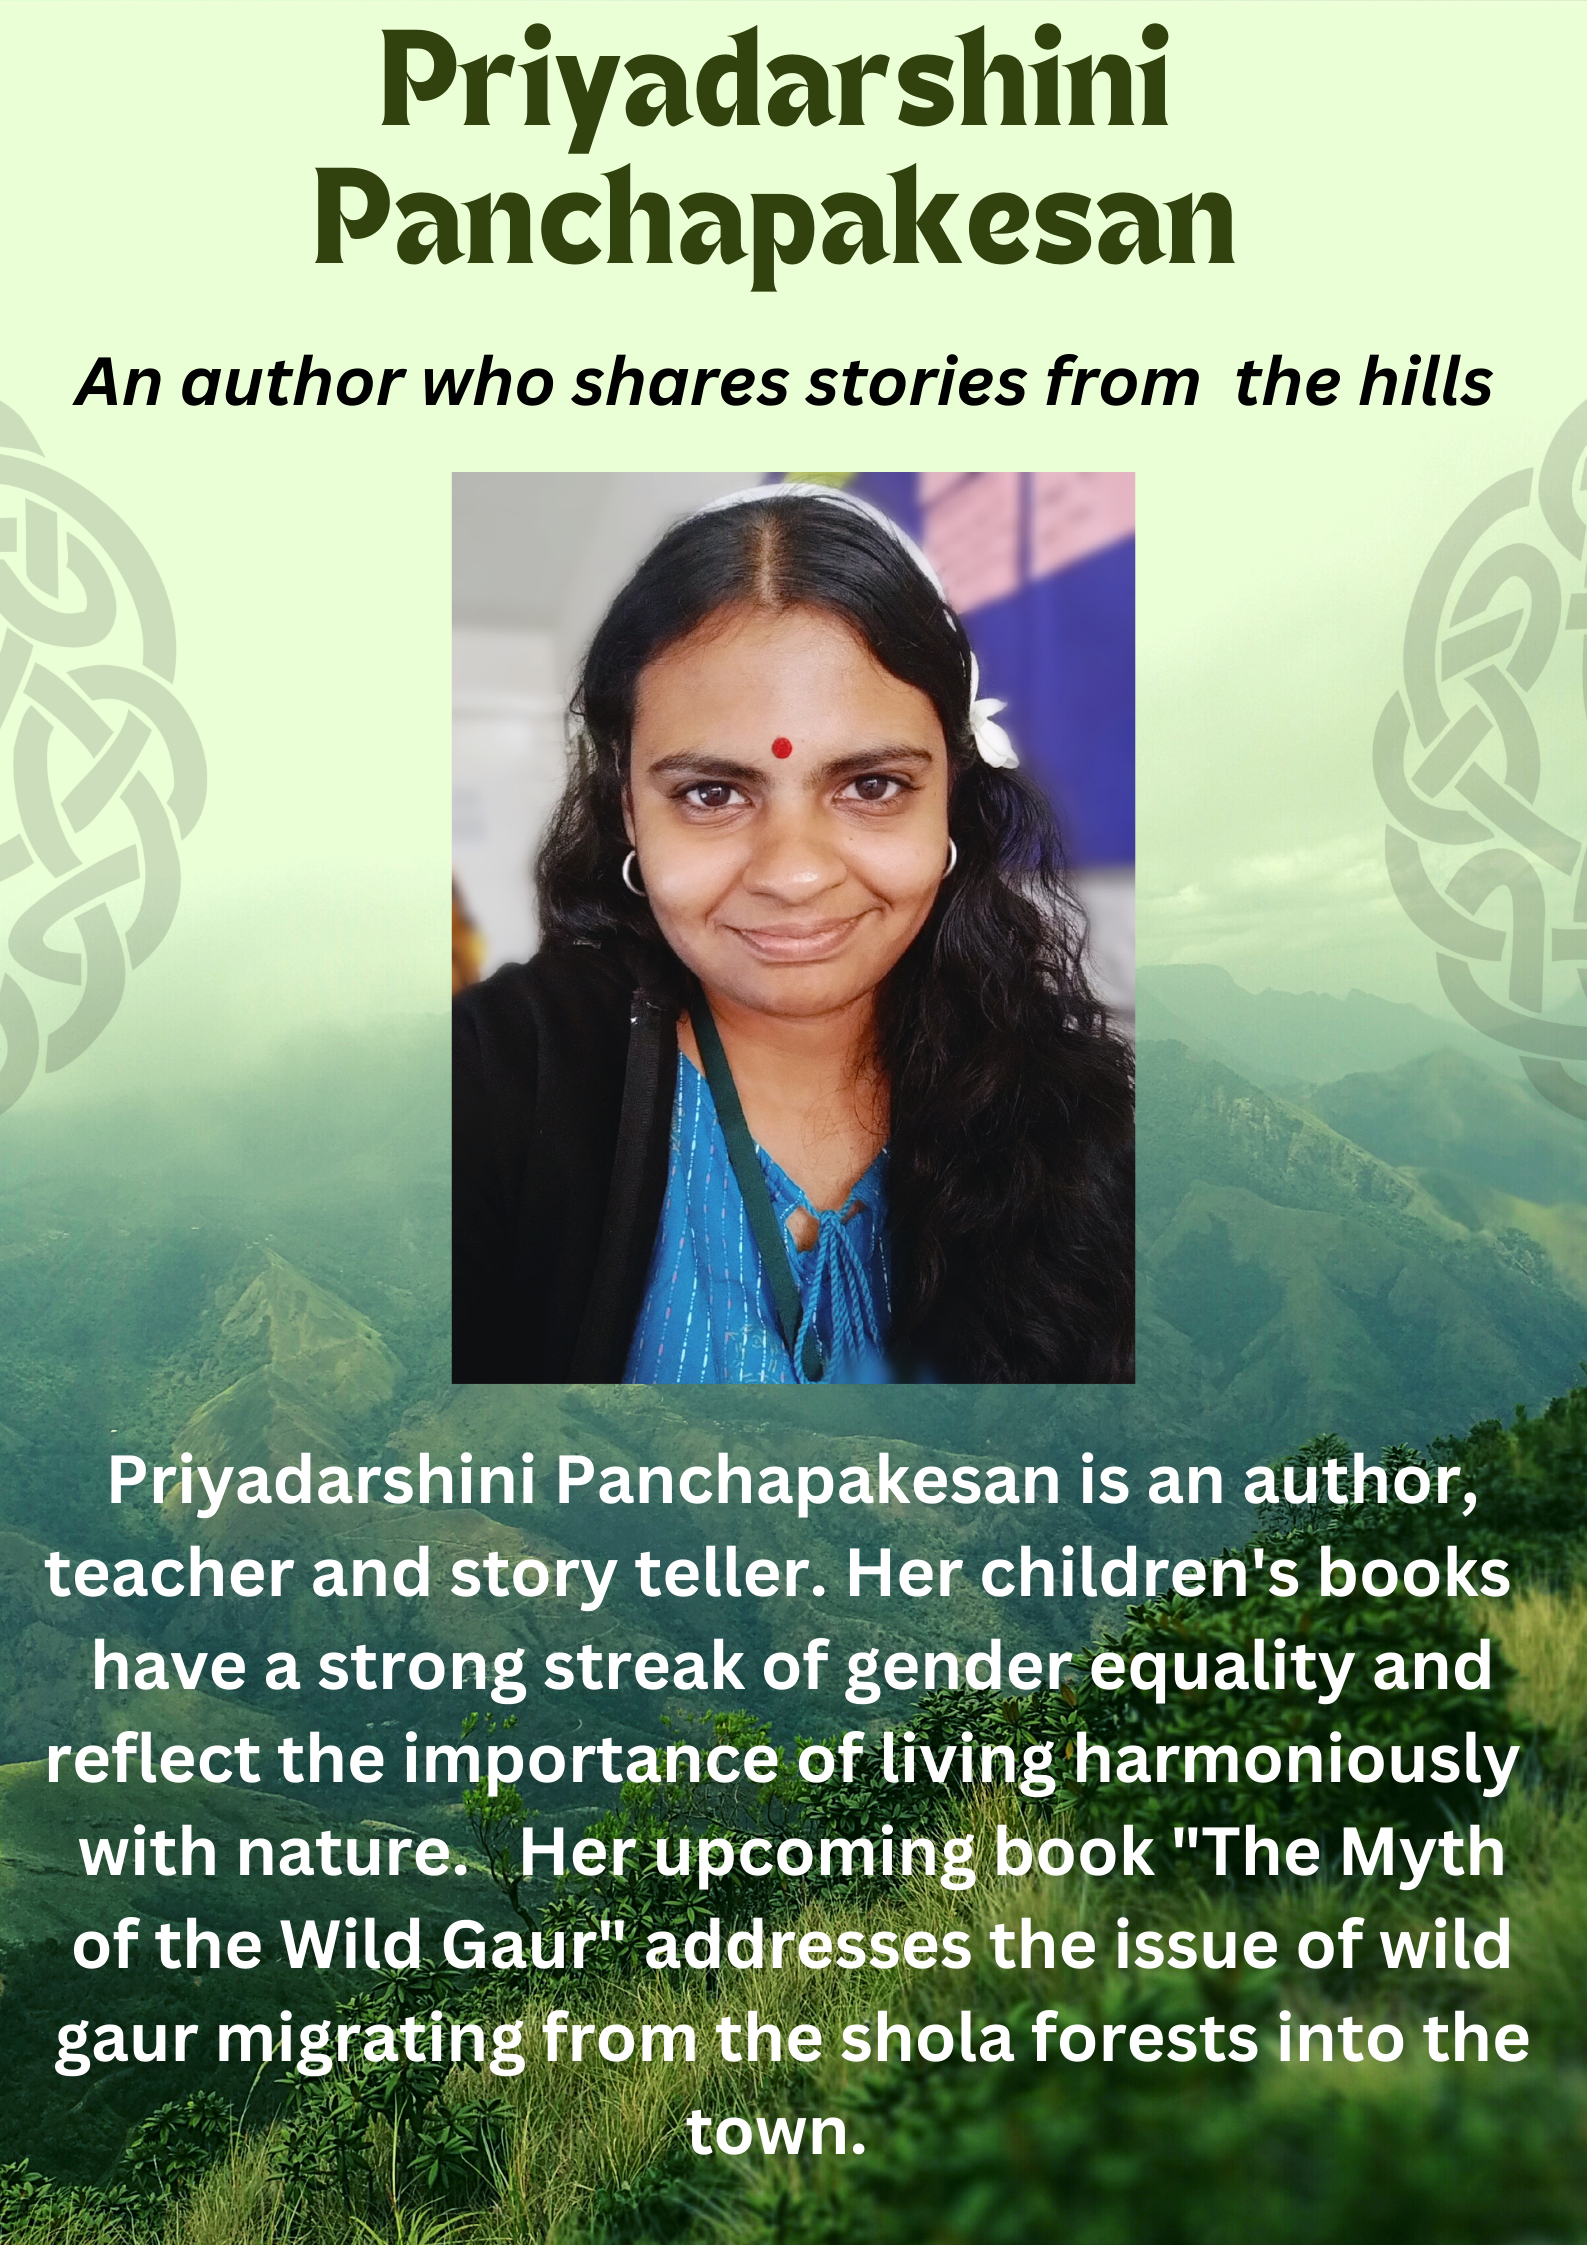 Priyadarshini Panchapakesan: A Budding Author from the Hills!